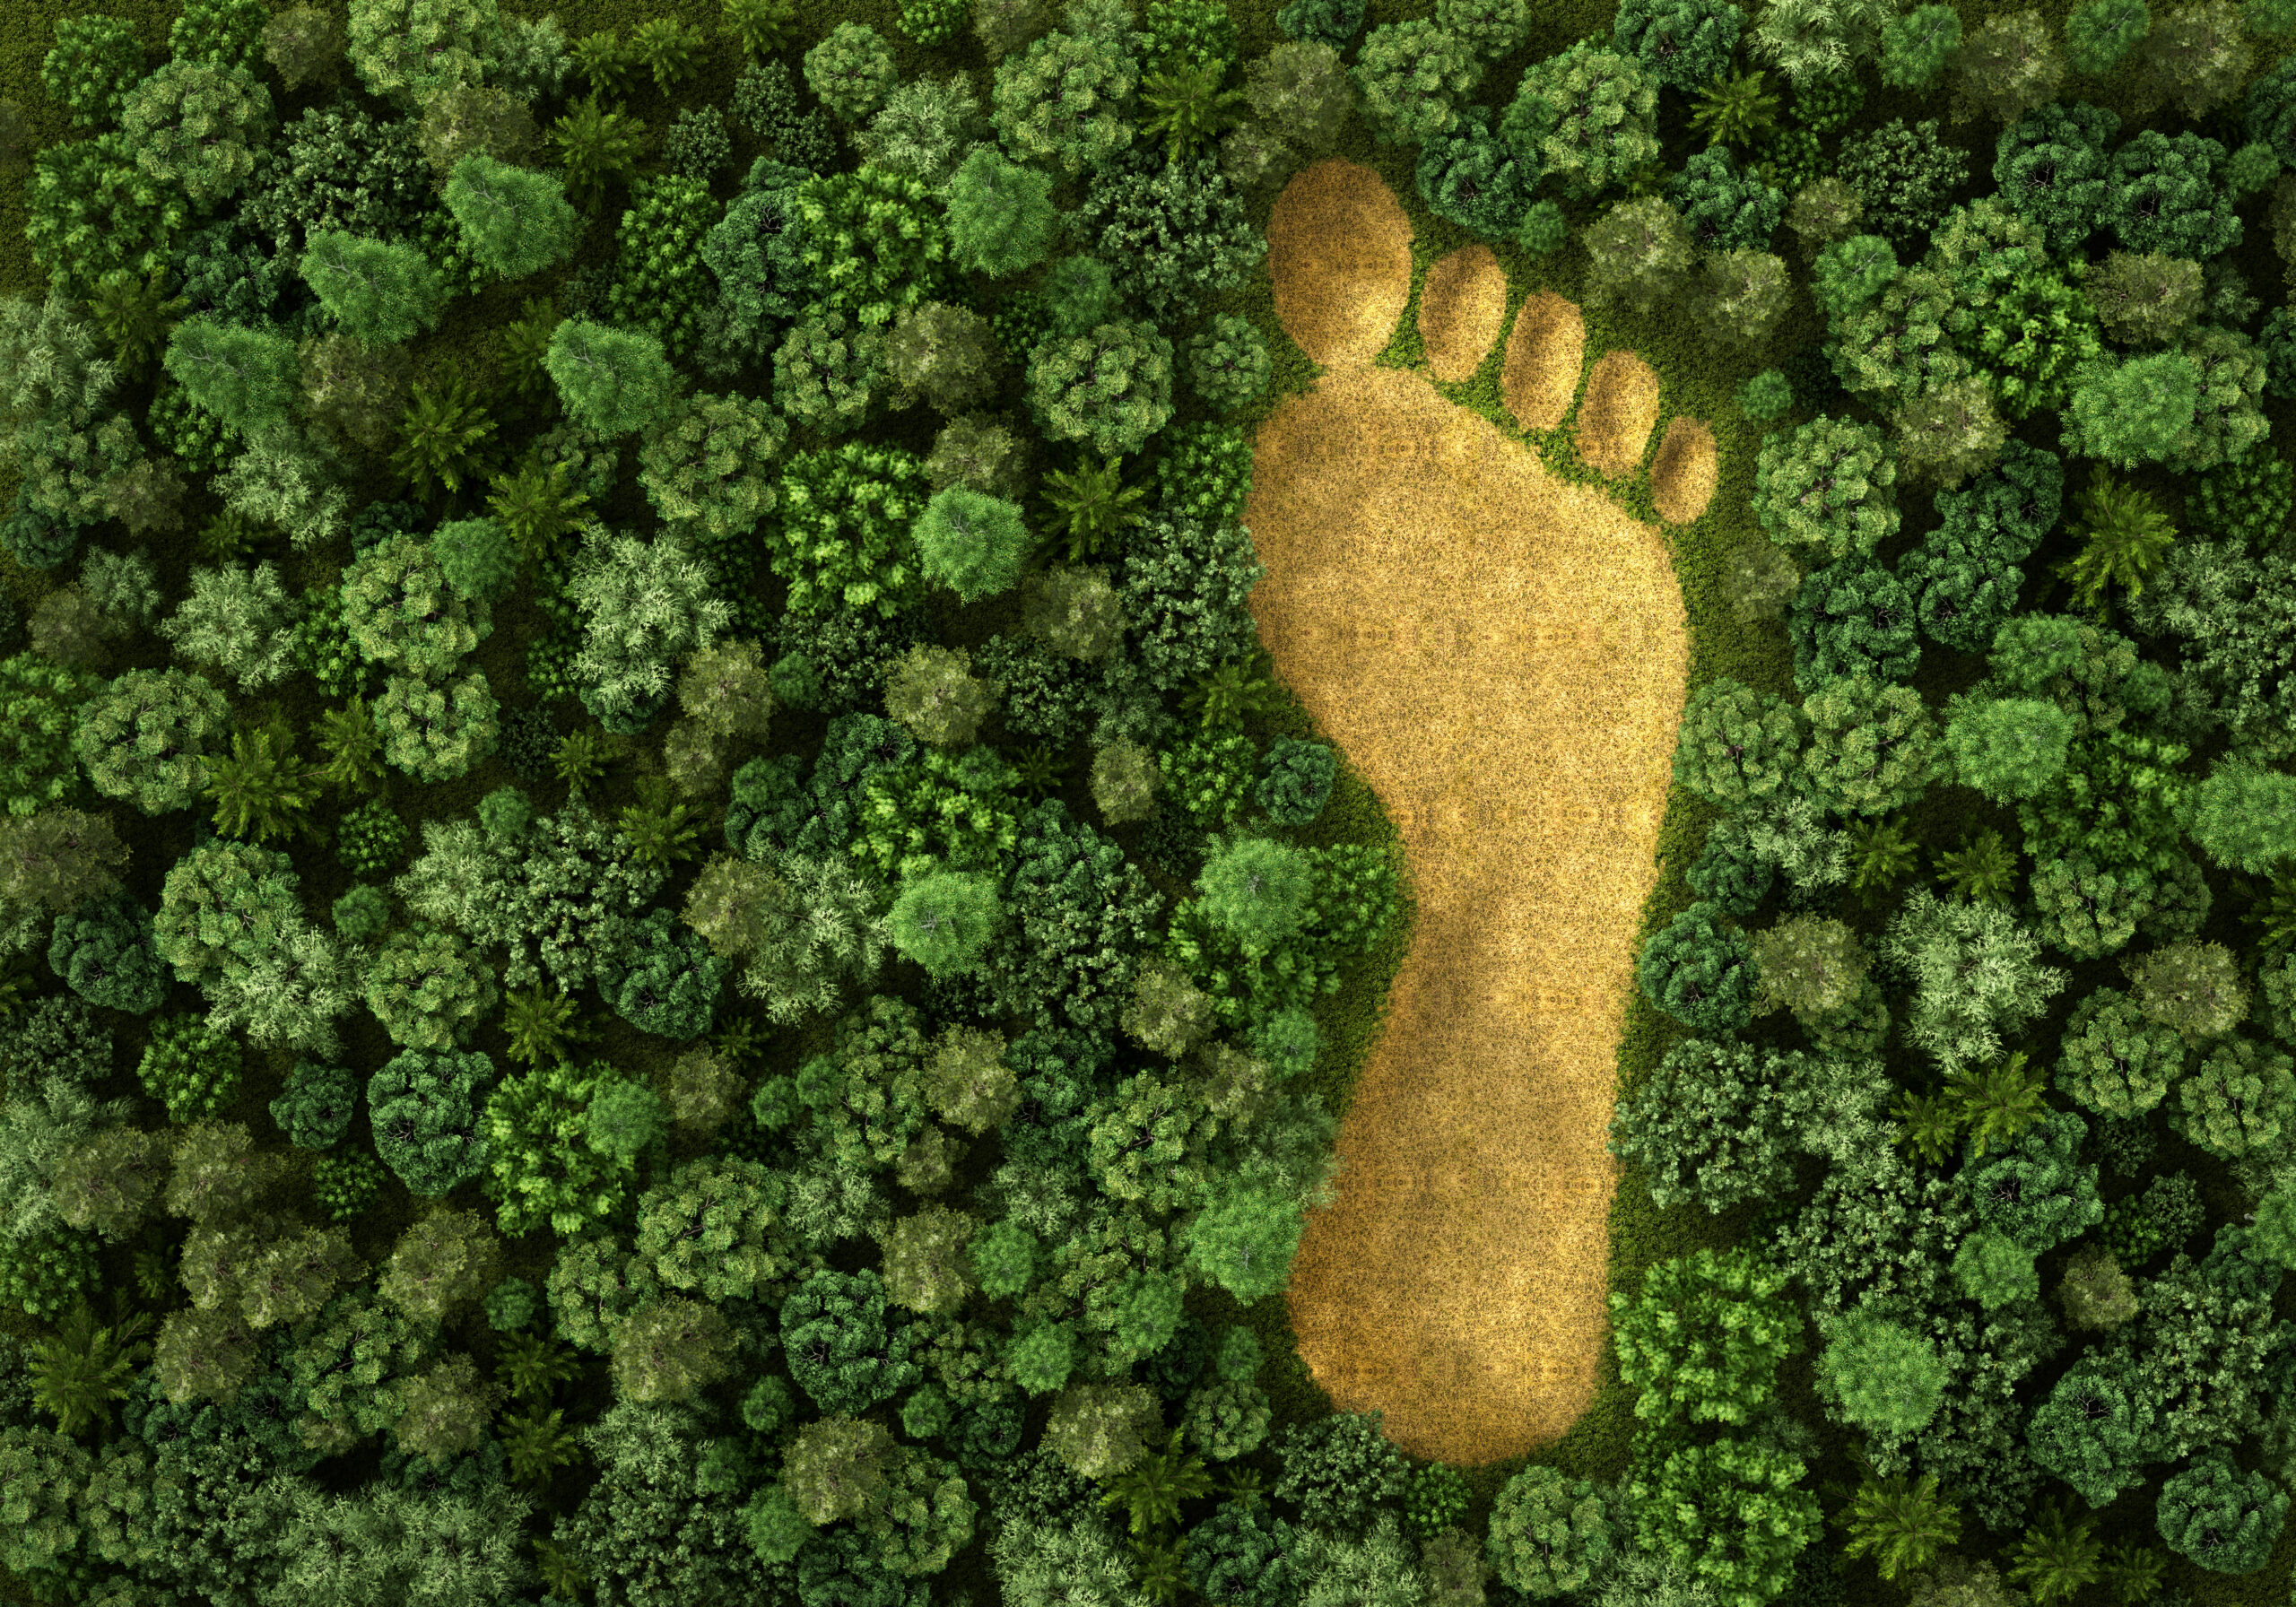 Module 2 – Ecological footprint